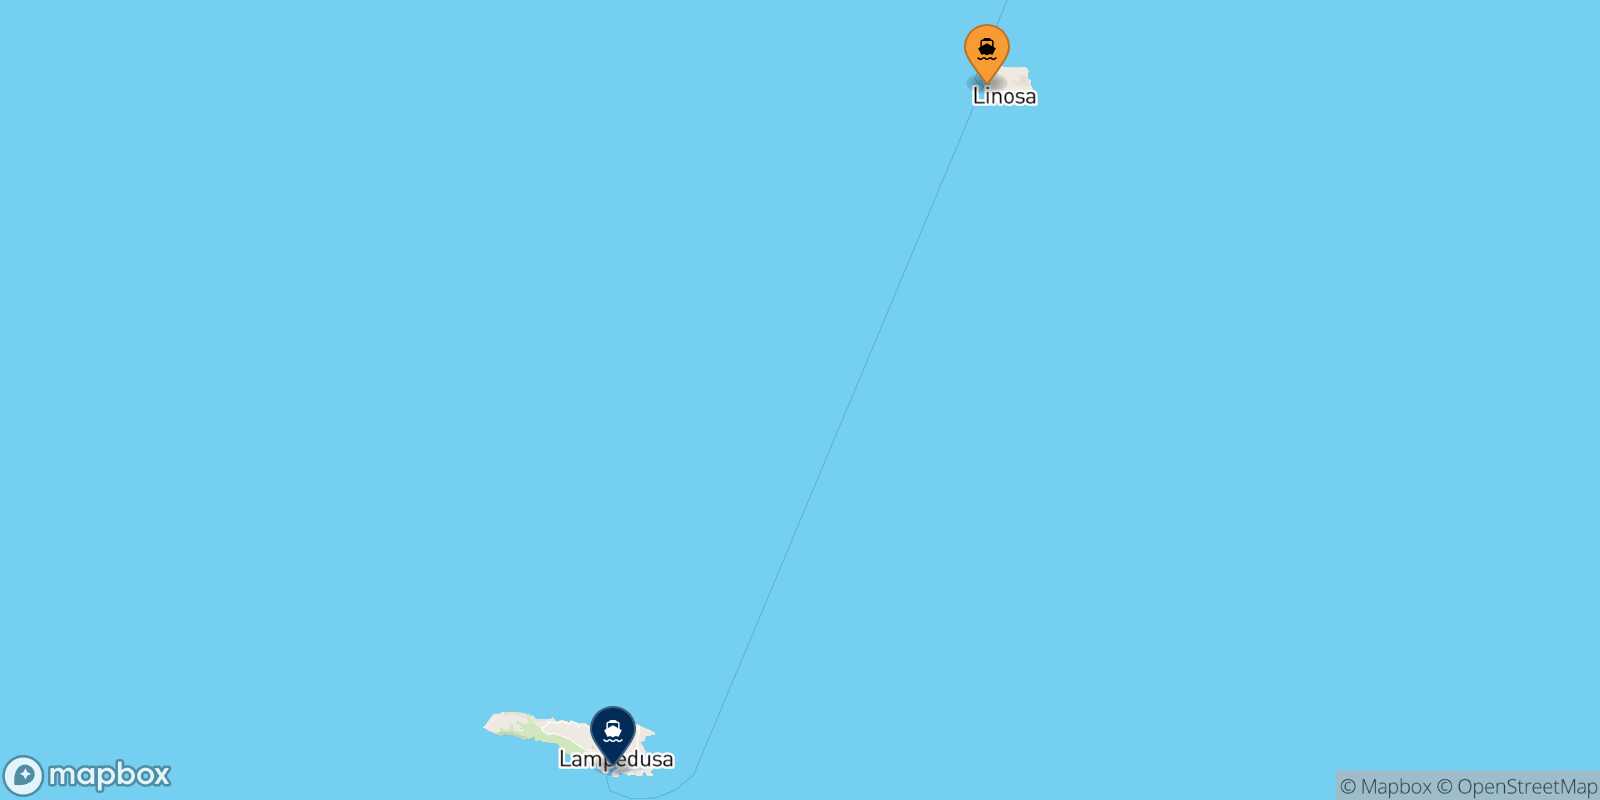 Linosa Lampedusa route map